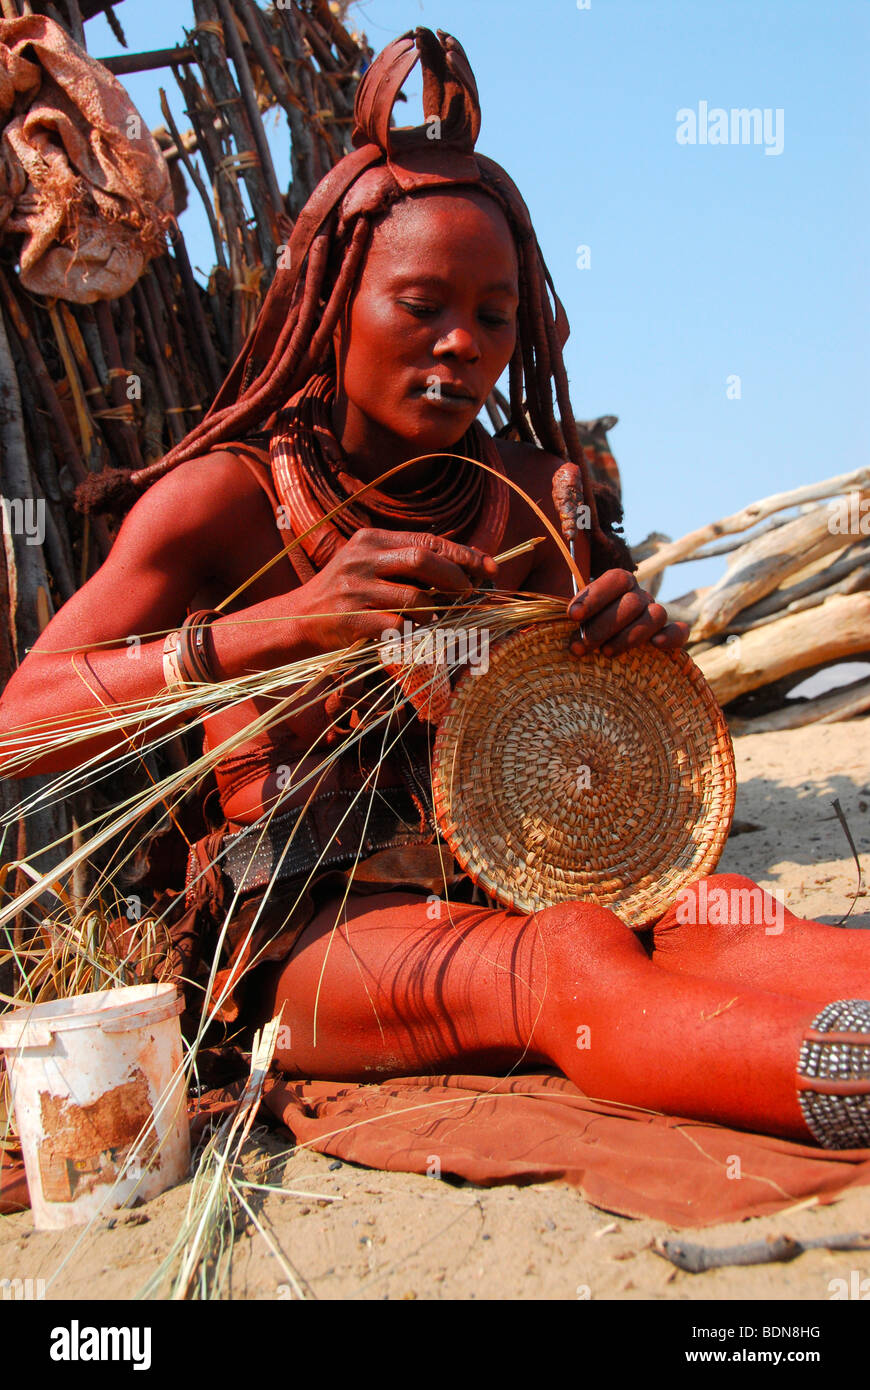 Himba woman making a bast mat, handicrafts, Purros, Kaokoveld, Namibia, Africa Stock Photo